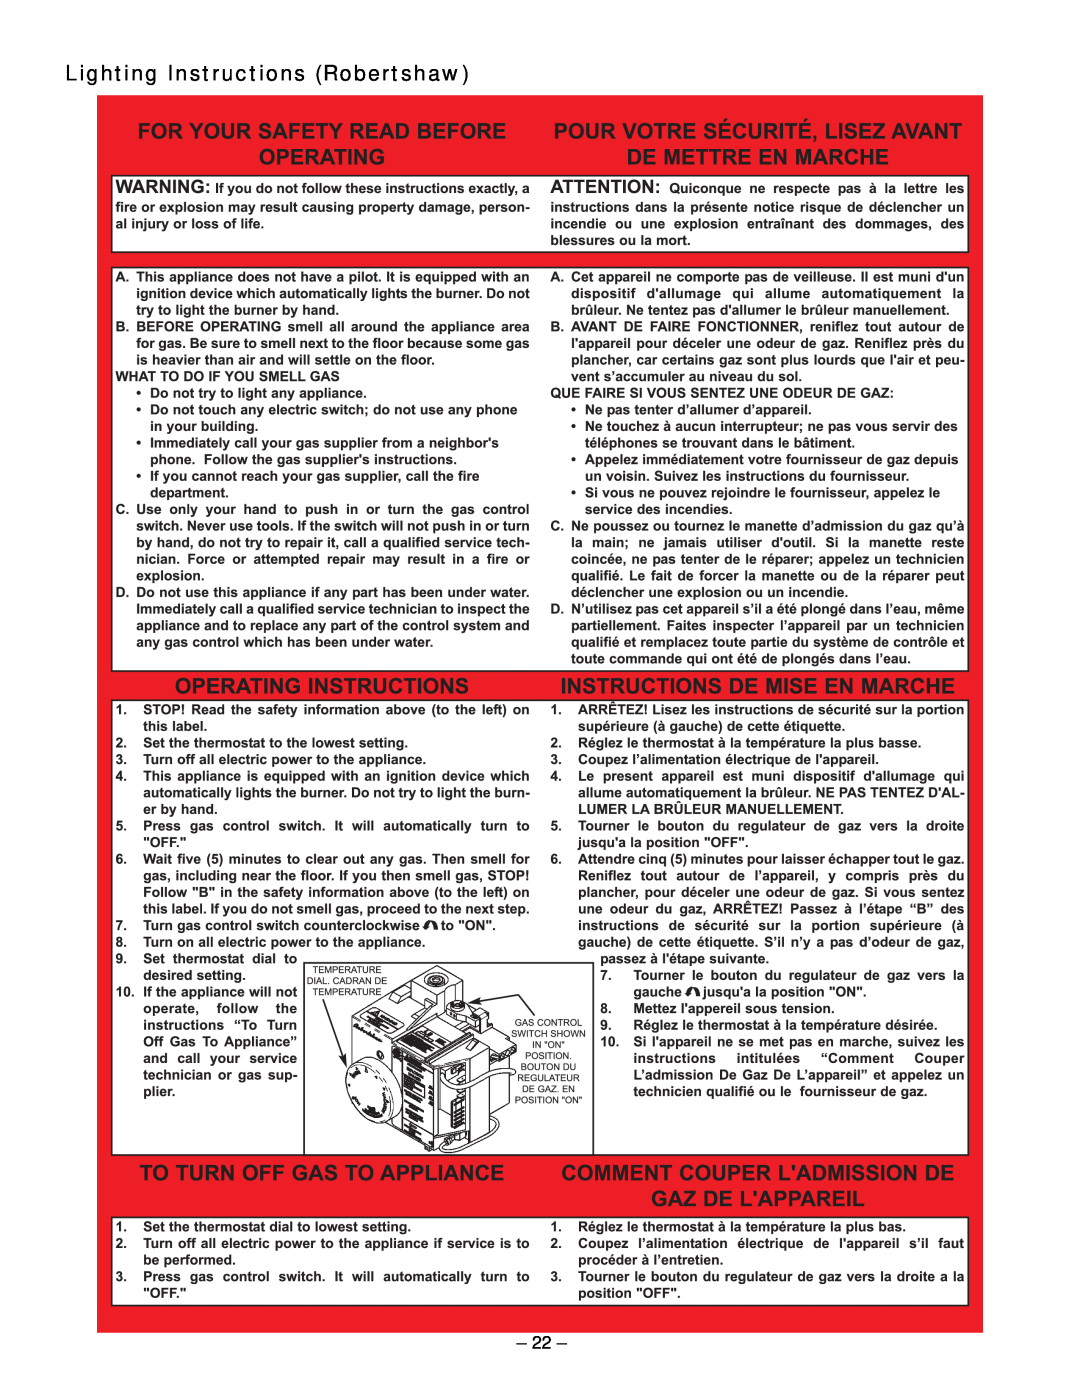 GSW 319594-000 manual Lighting Instructions Robertshaw 